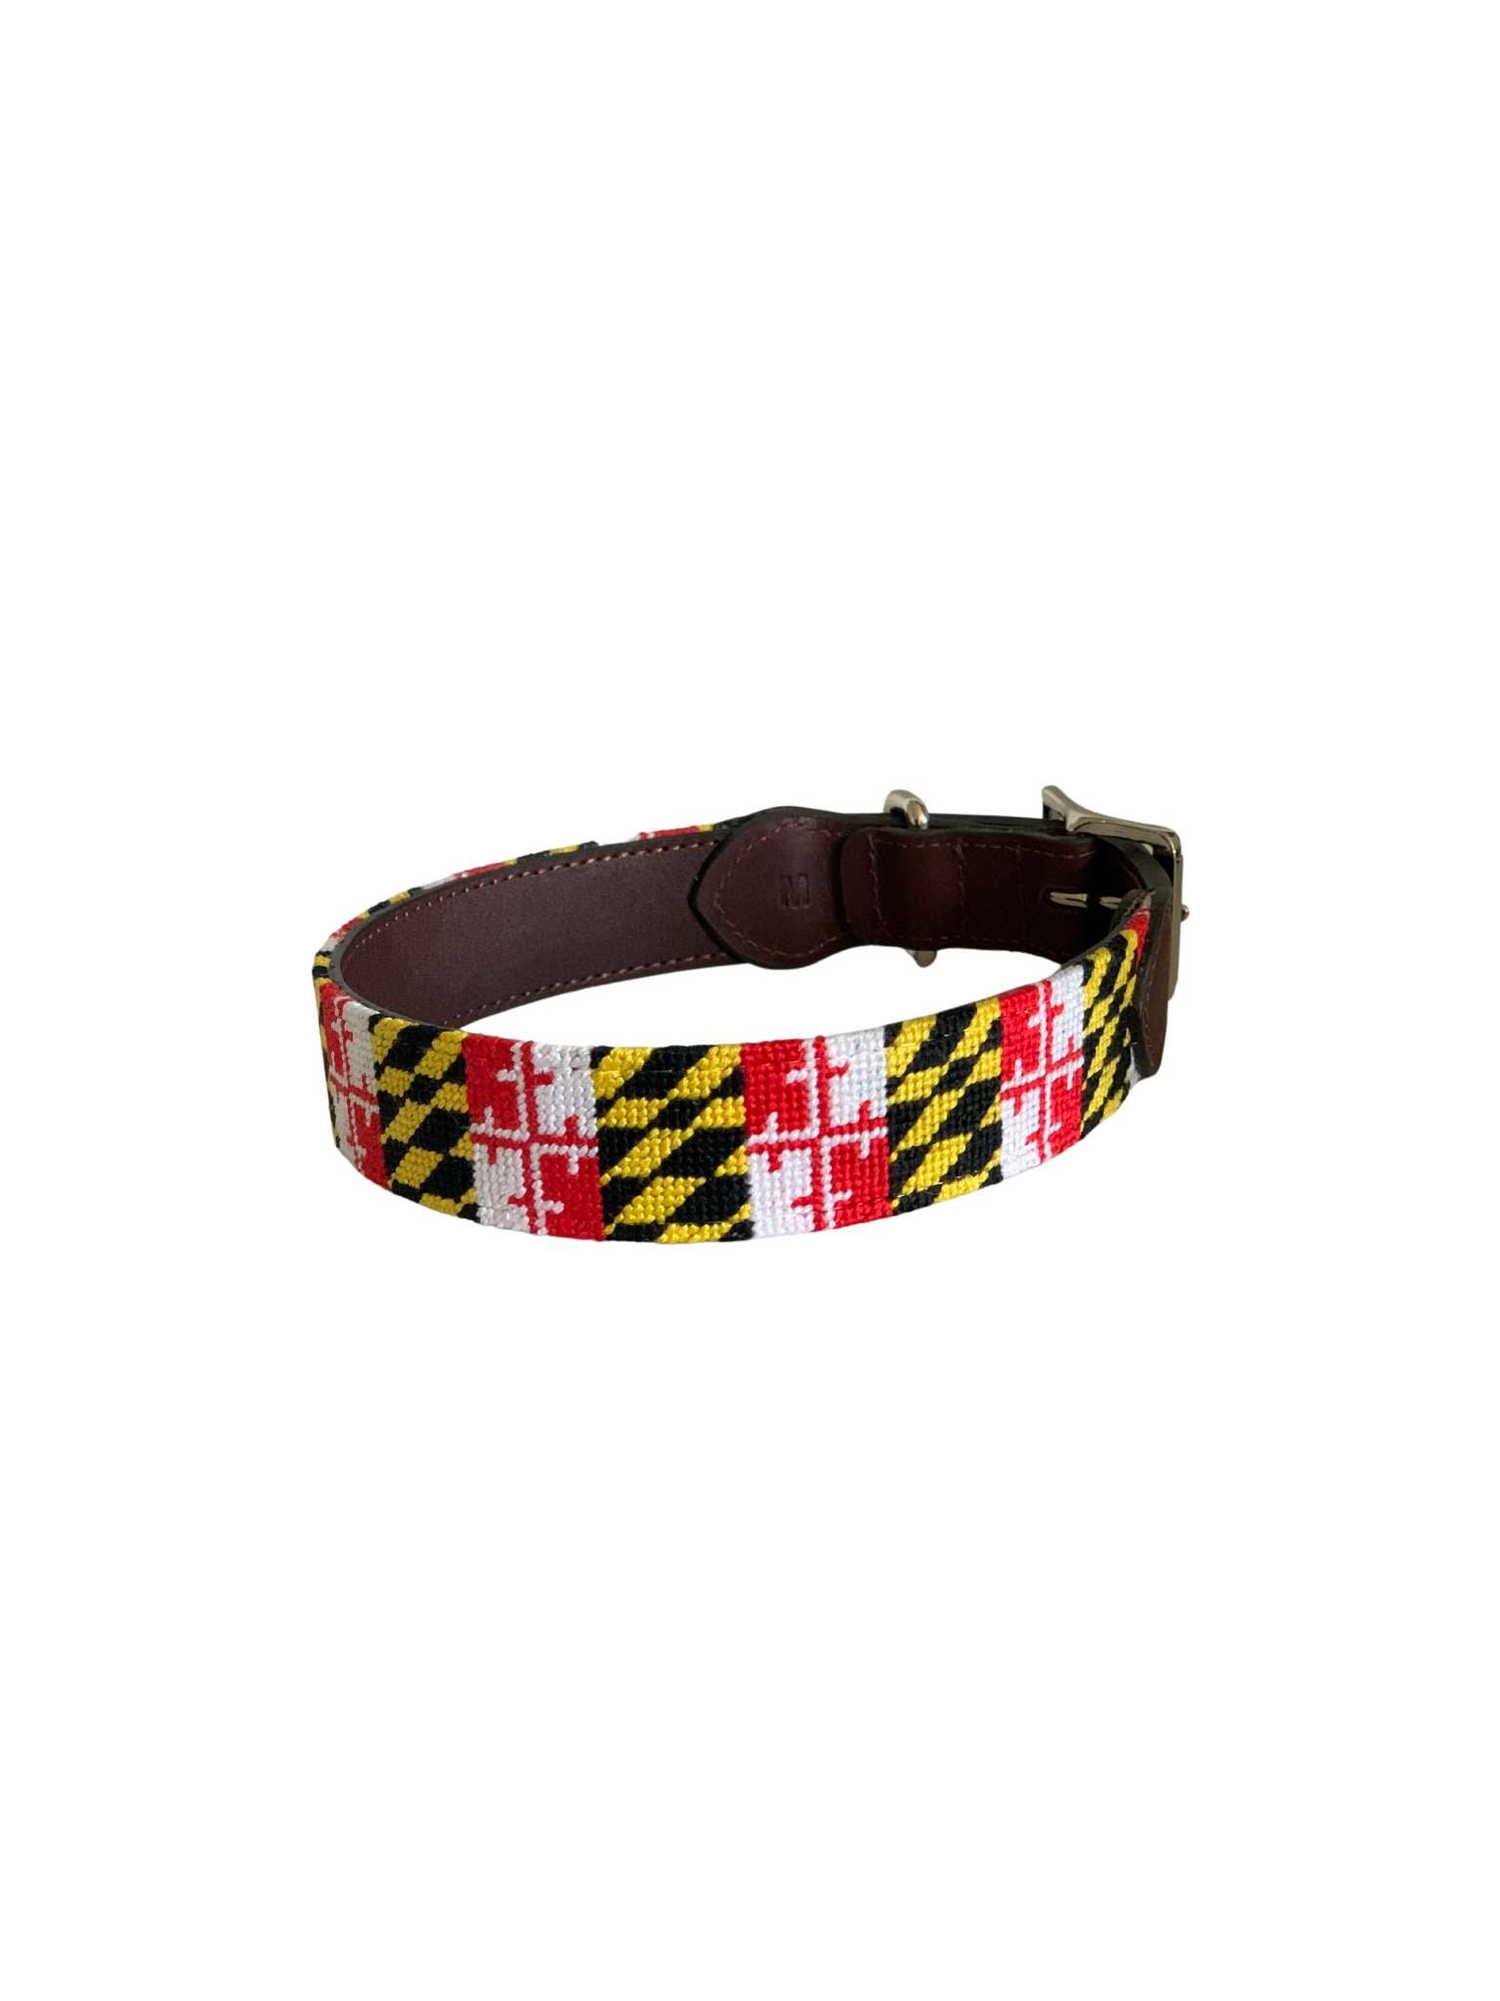 Needlepoint Dog Collar- Maryland Flag Design / Baldwin Belts